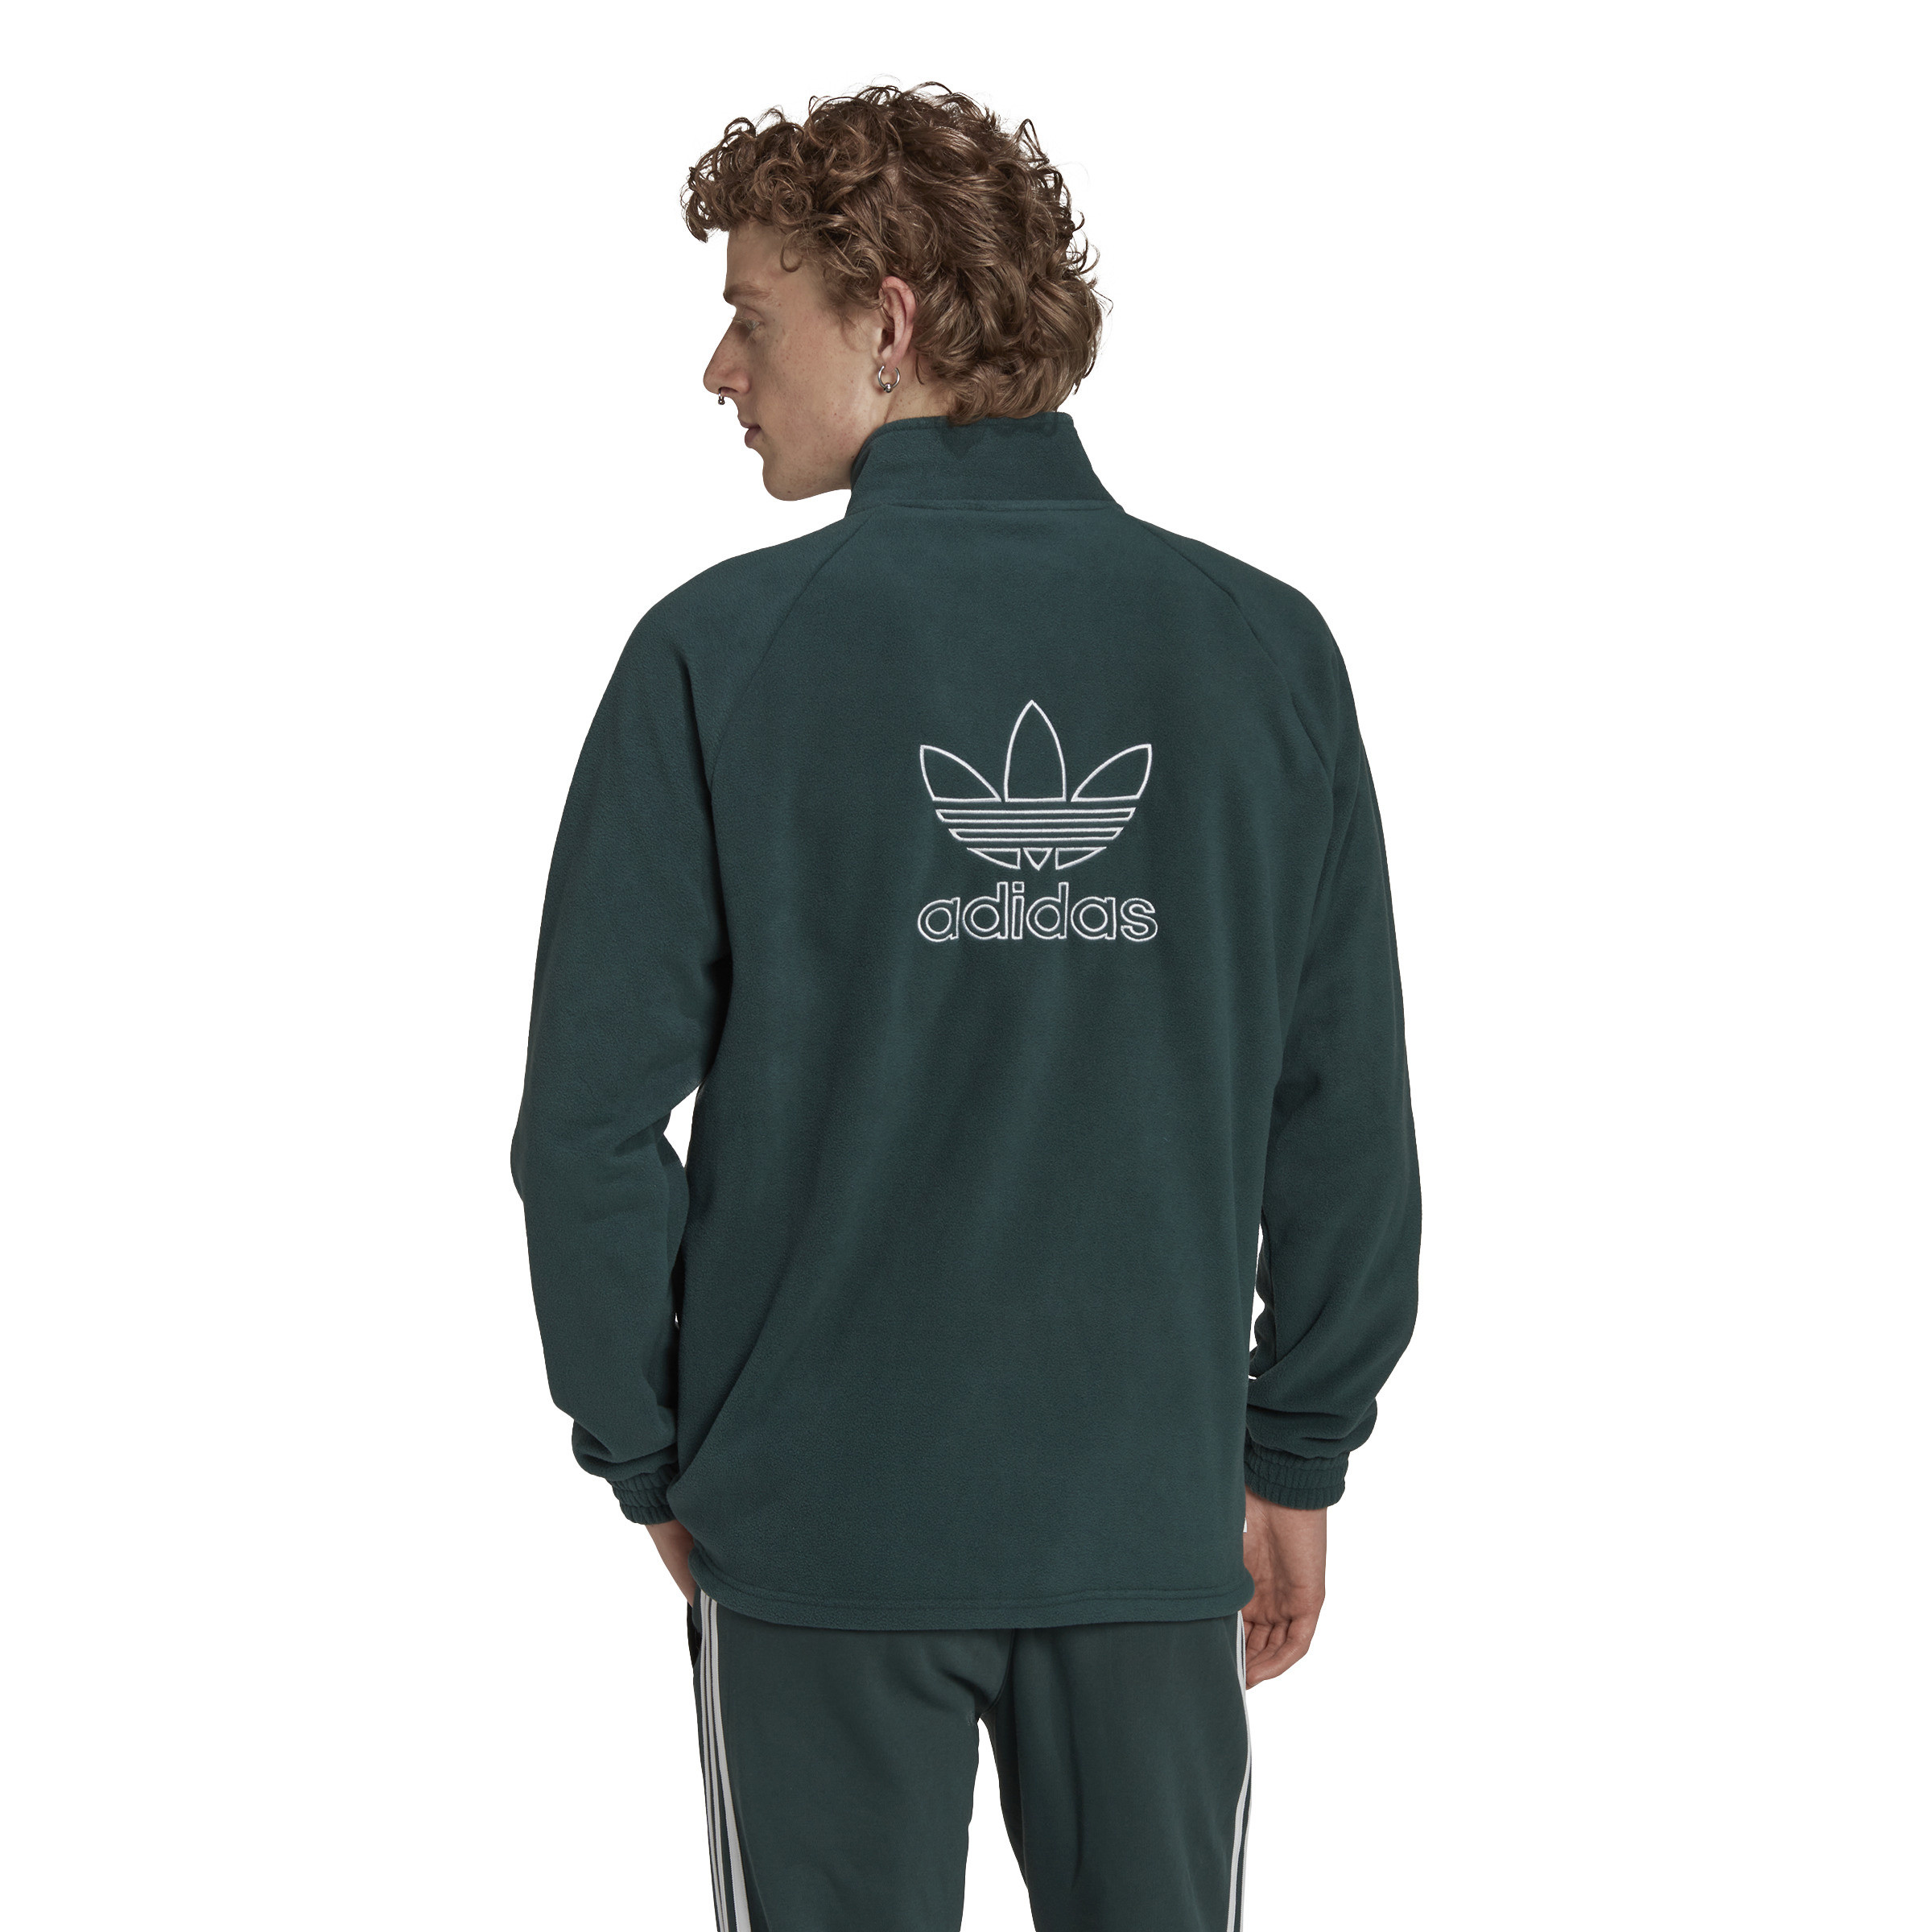 Adidas - Adicolor Classics Trefoil Fleece Jacket, Dark Green, large image number 3